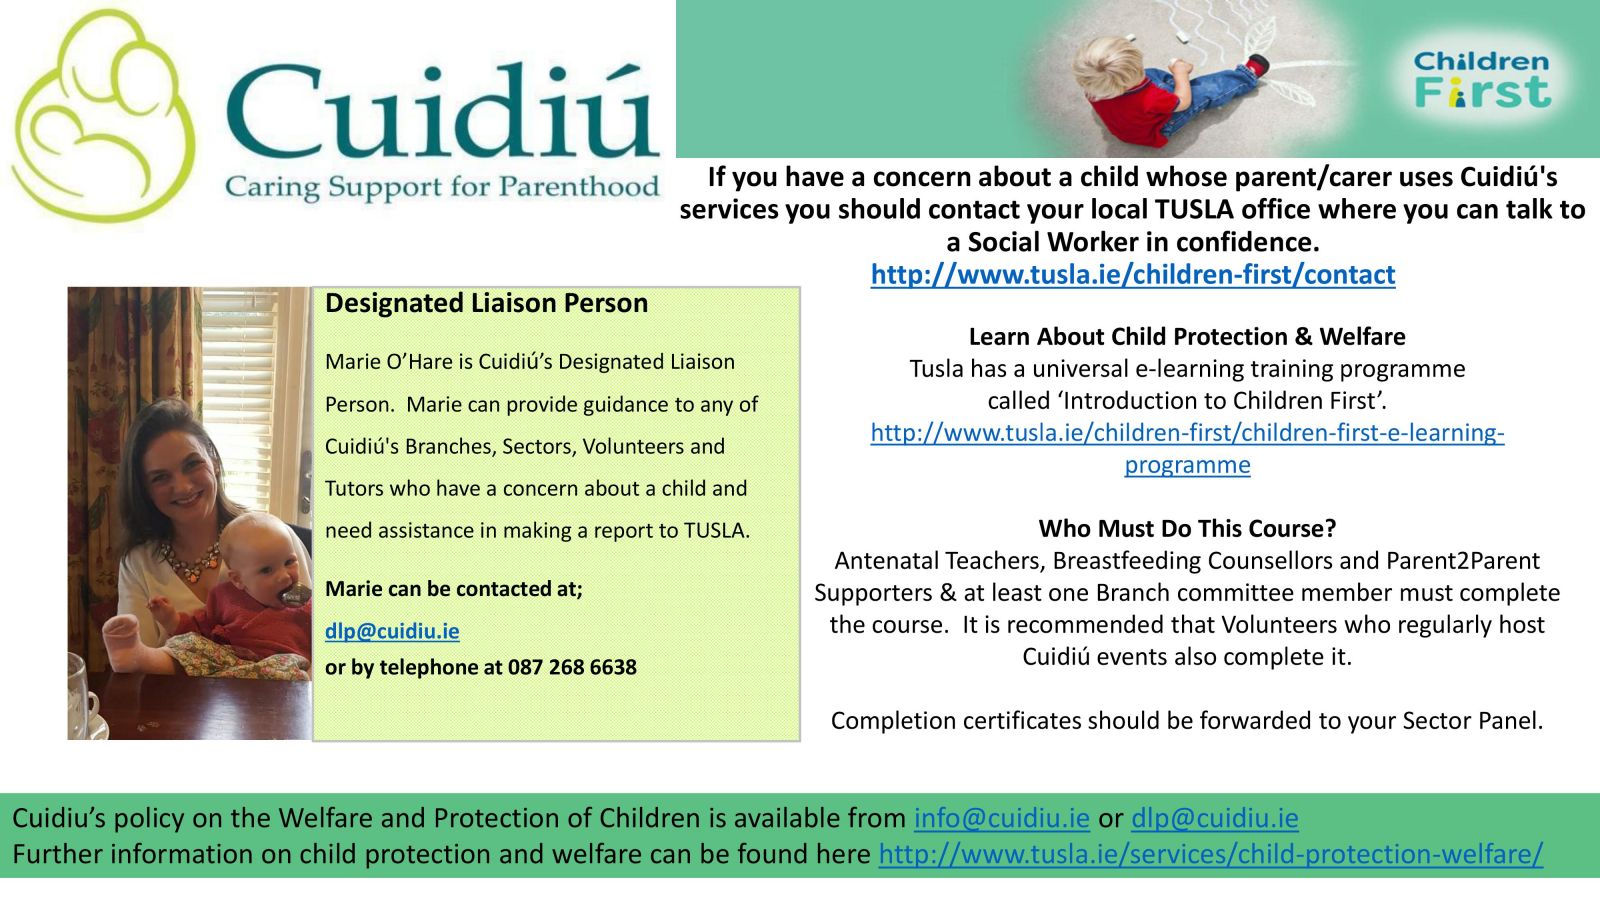 Designated Liaison Person for Child Protection